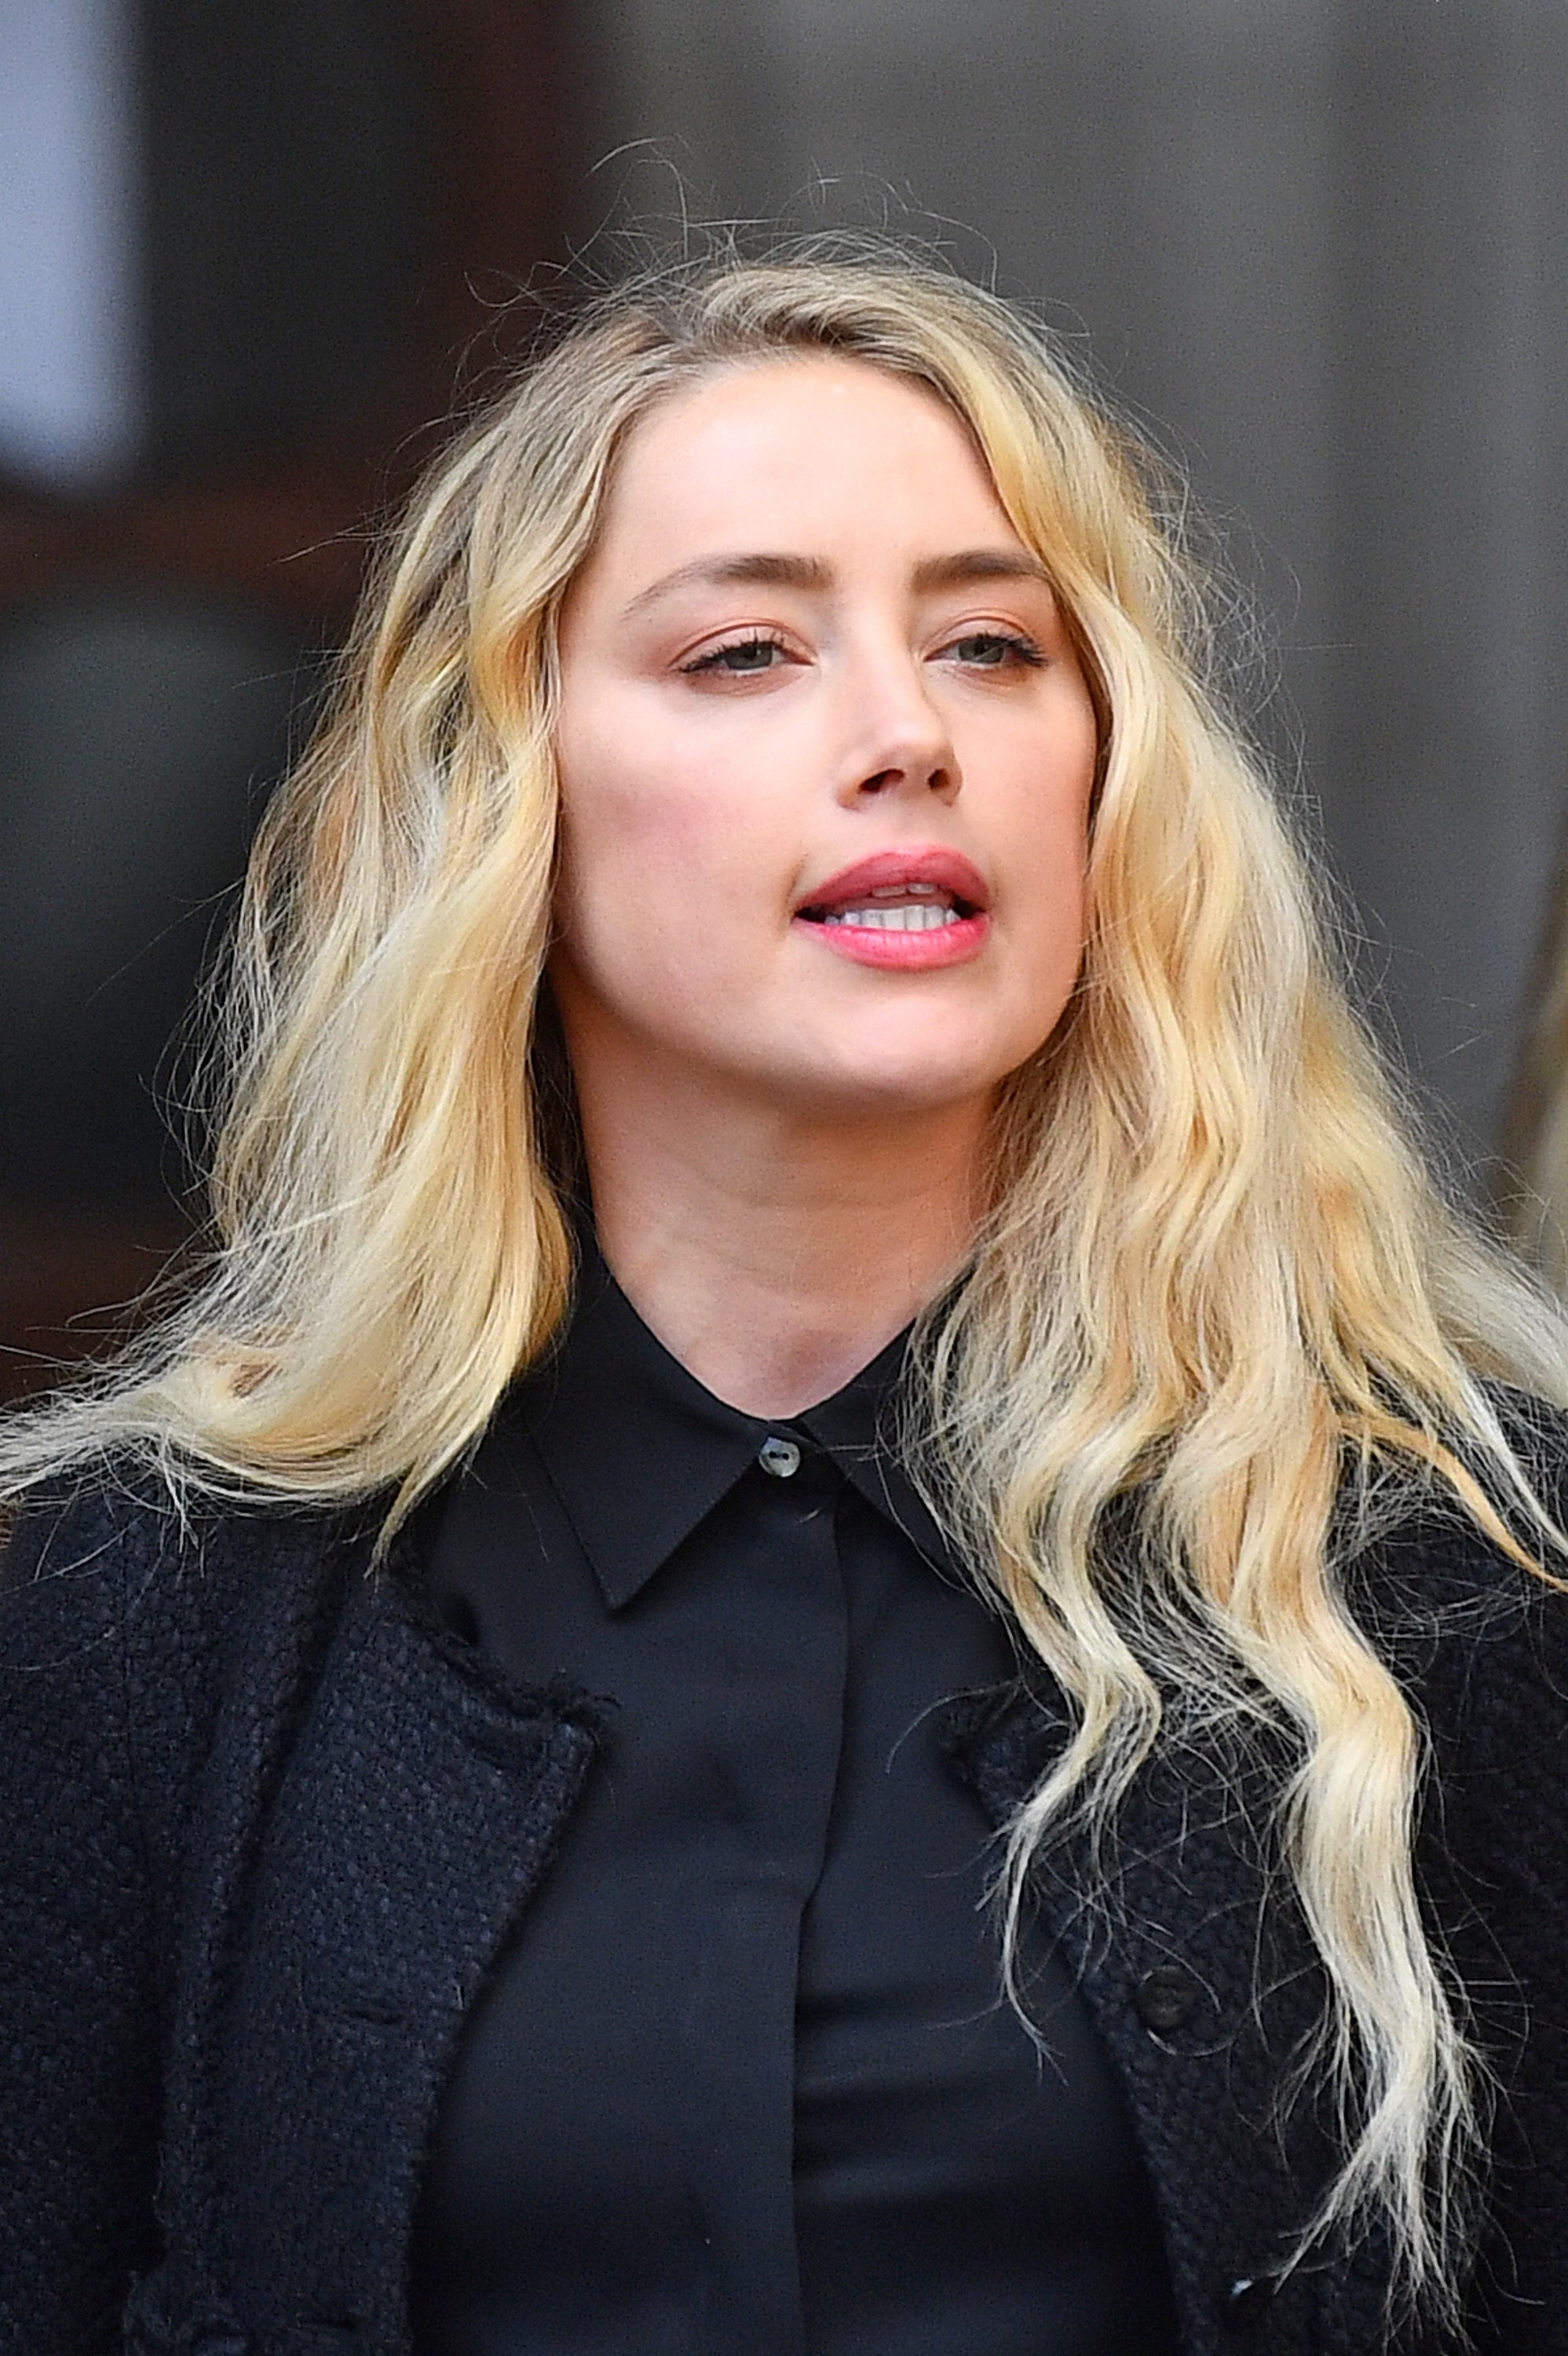 Amber heard requests verdict in Johnny Depp defamation trial be overturned (Victoria Jones/PA)